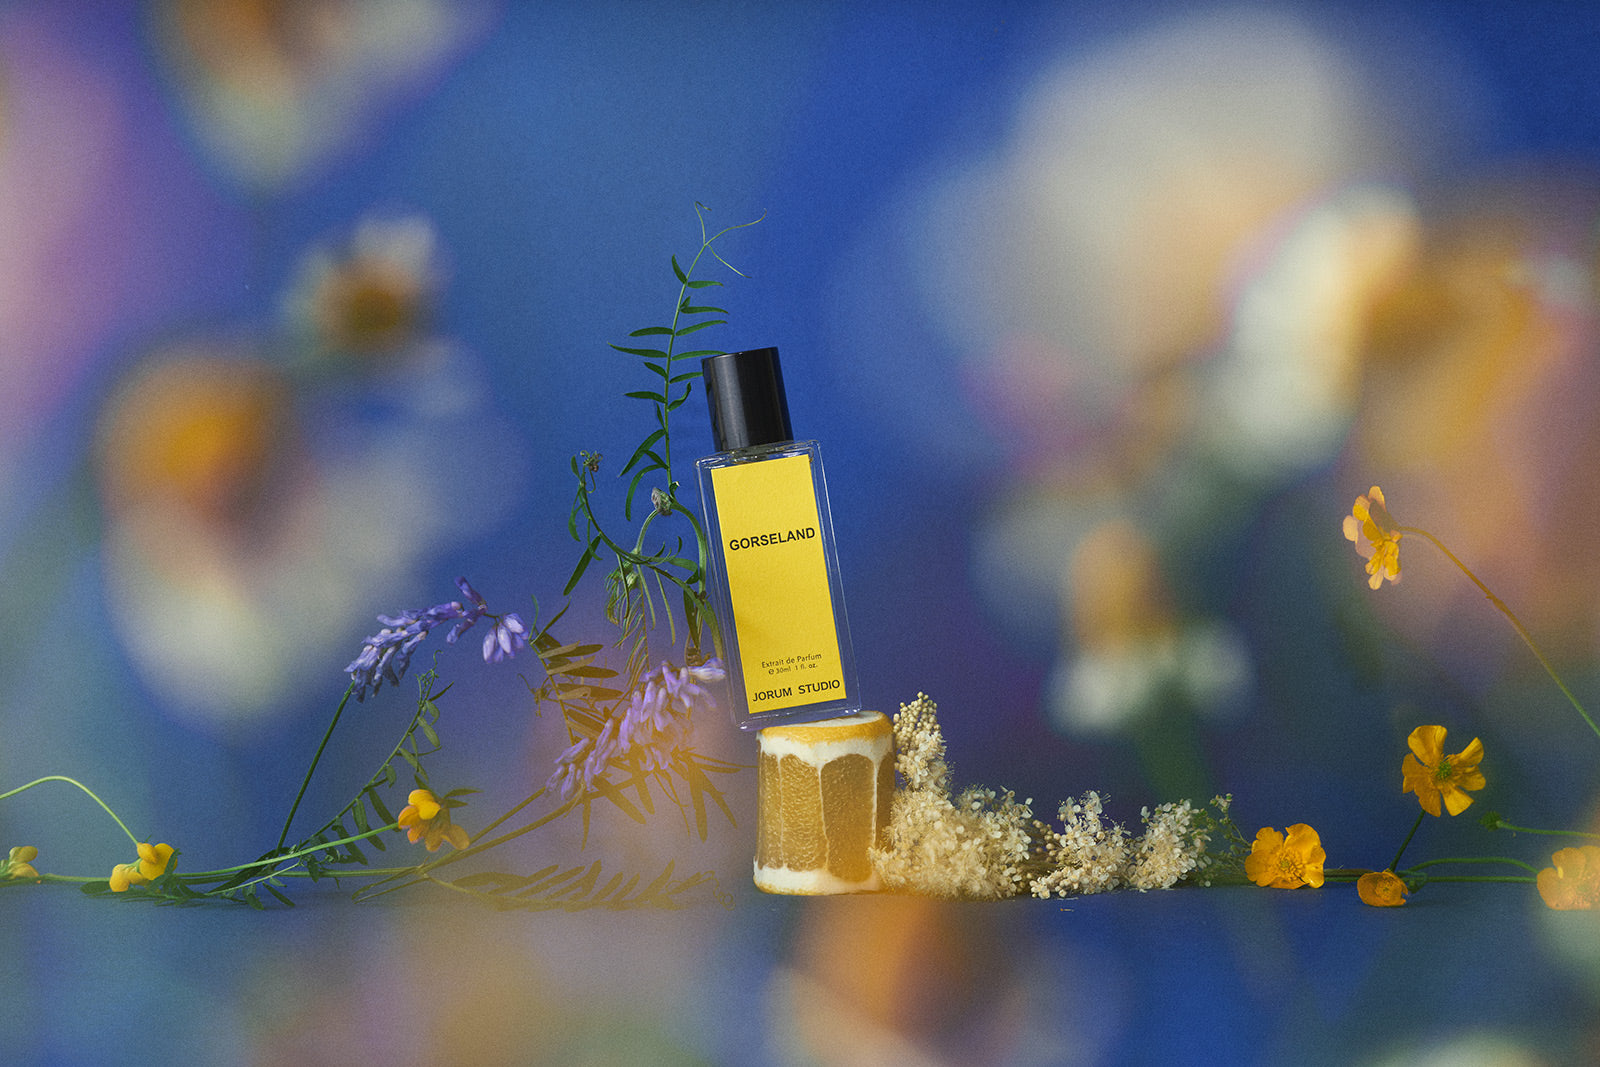 Bottle of Jorum Studio Gorseland perfume with floral arrangement against blue background by Gabriela Silveira